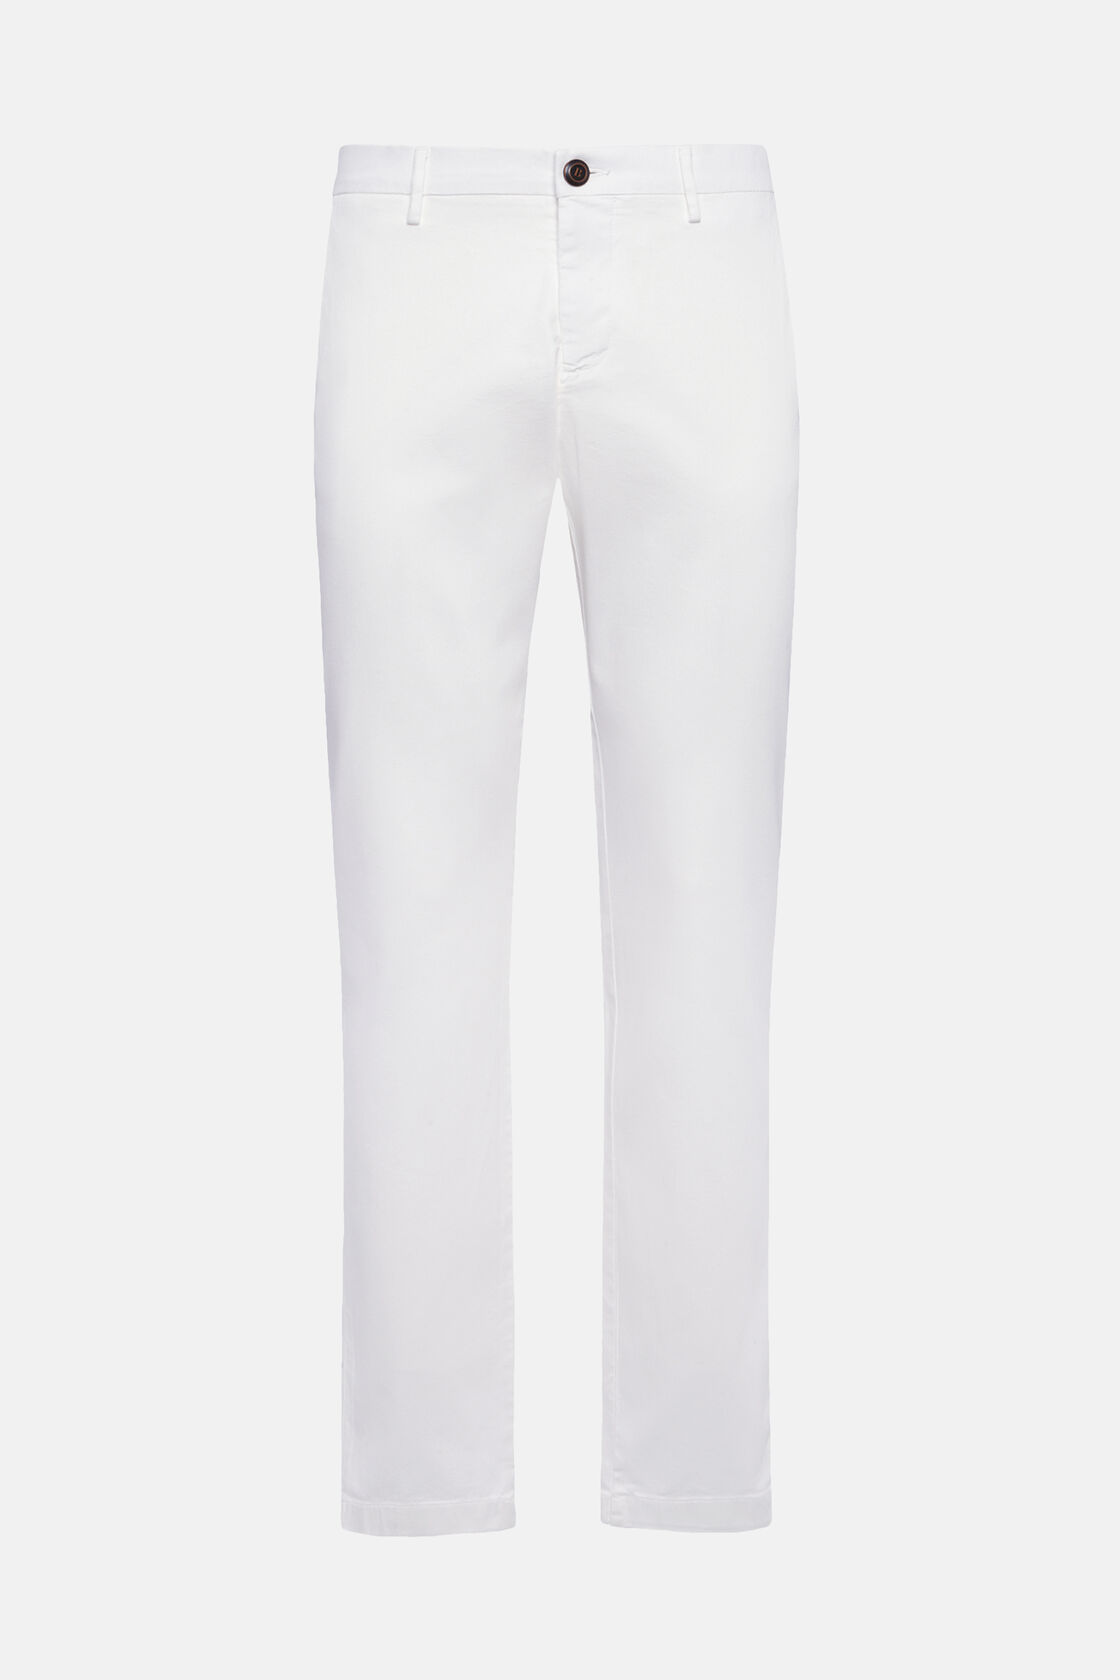 Pantalon En Coton Tencel Extensible, Blanc, hi-res